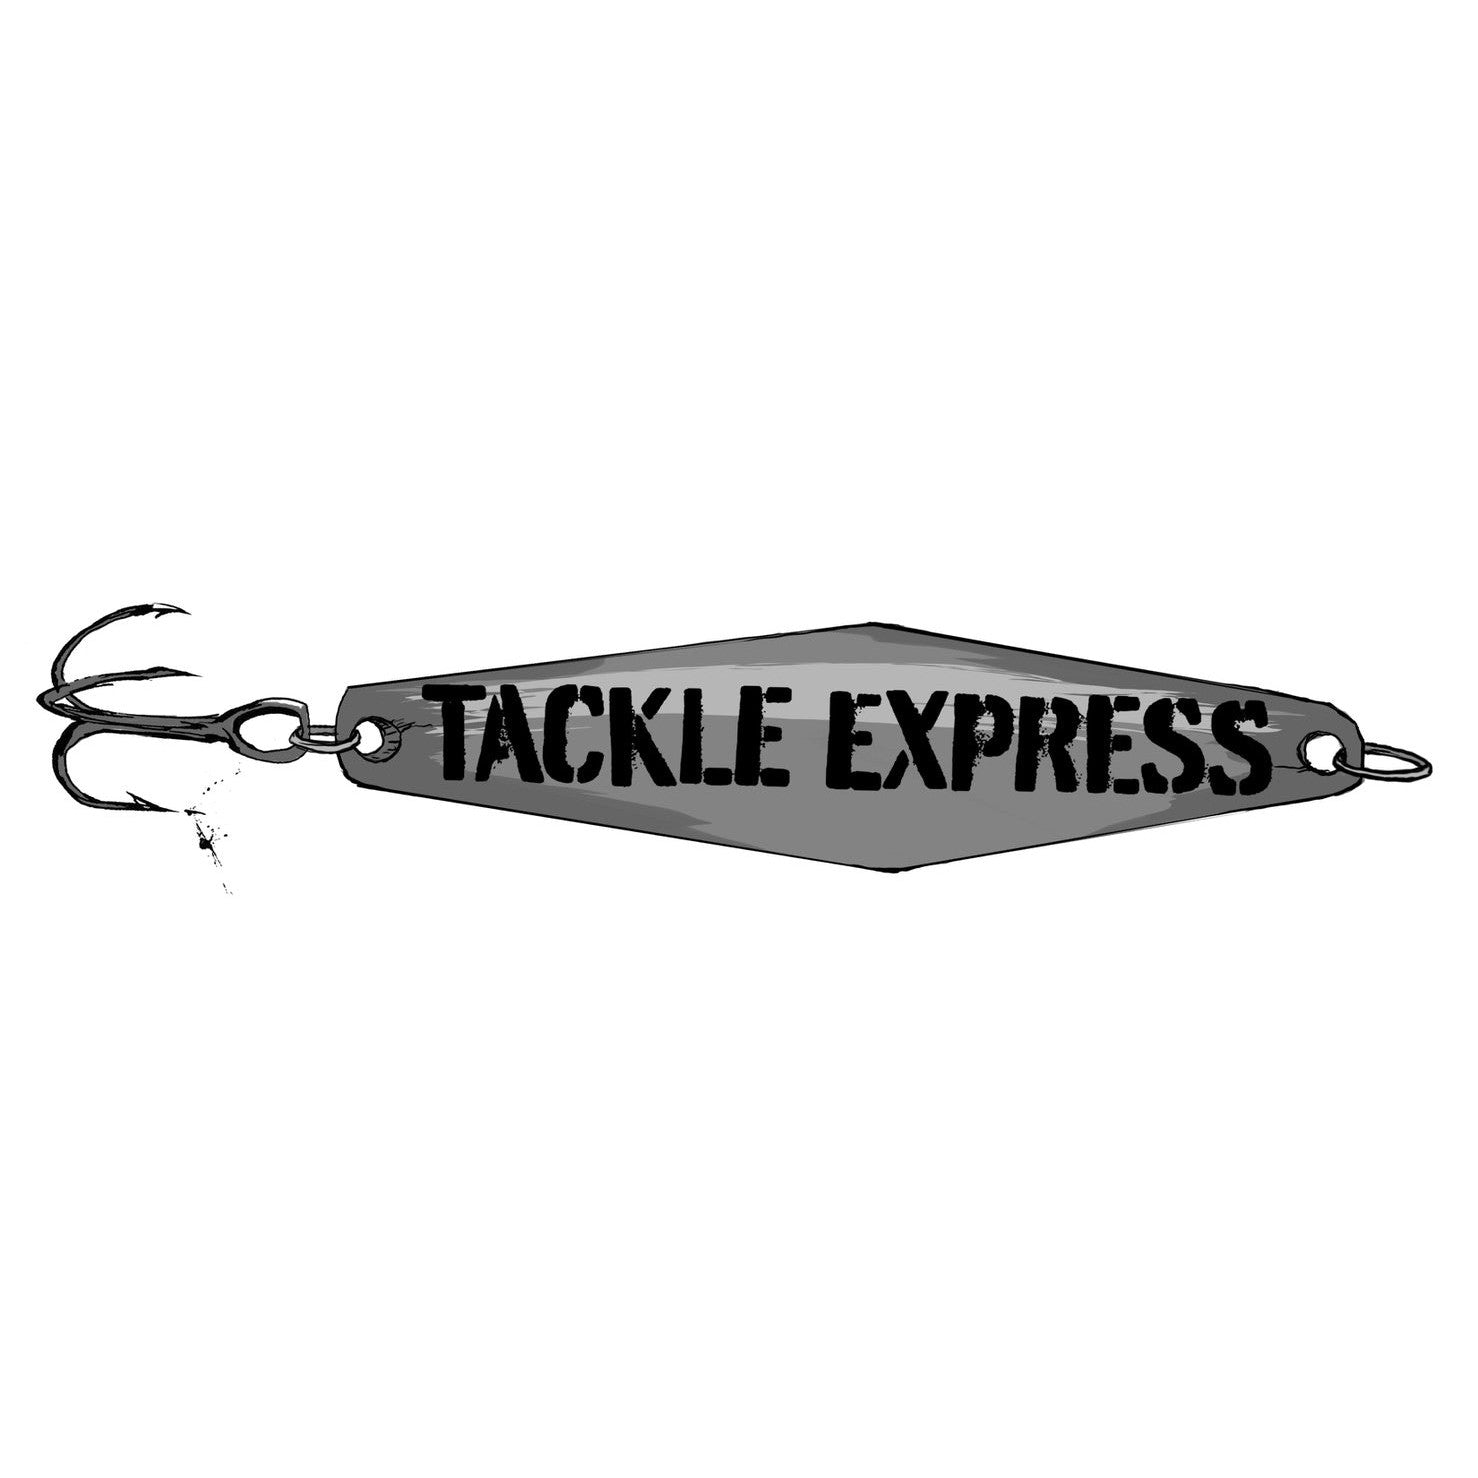 Tackle Express Sticker Iron